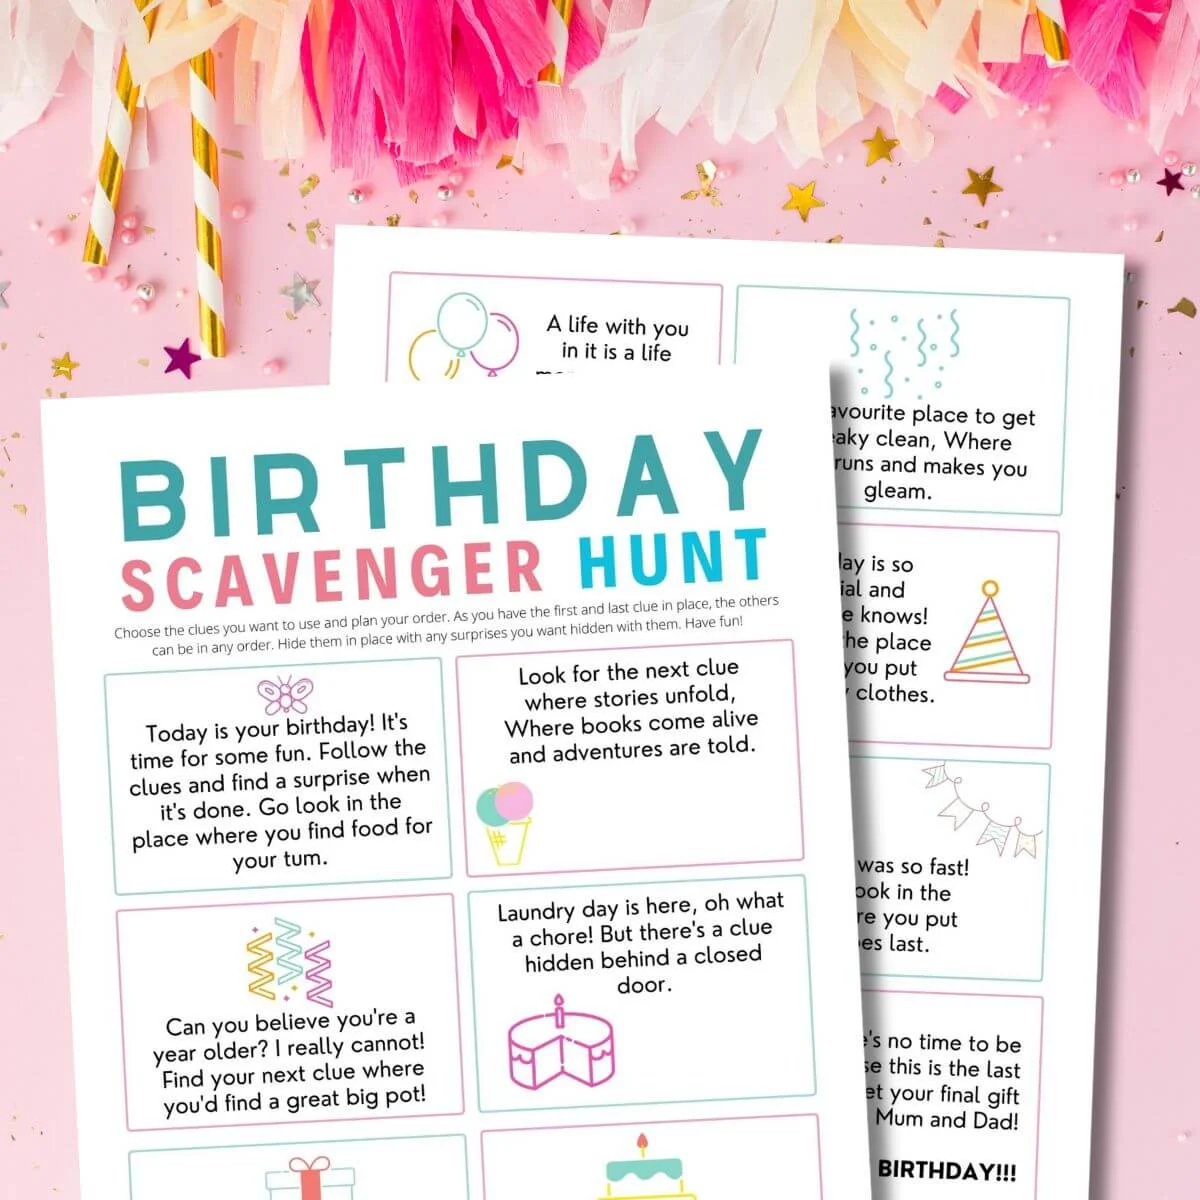 Printable birthday scavenger hunt clues.